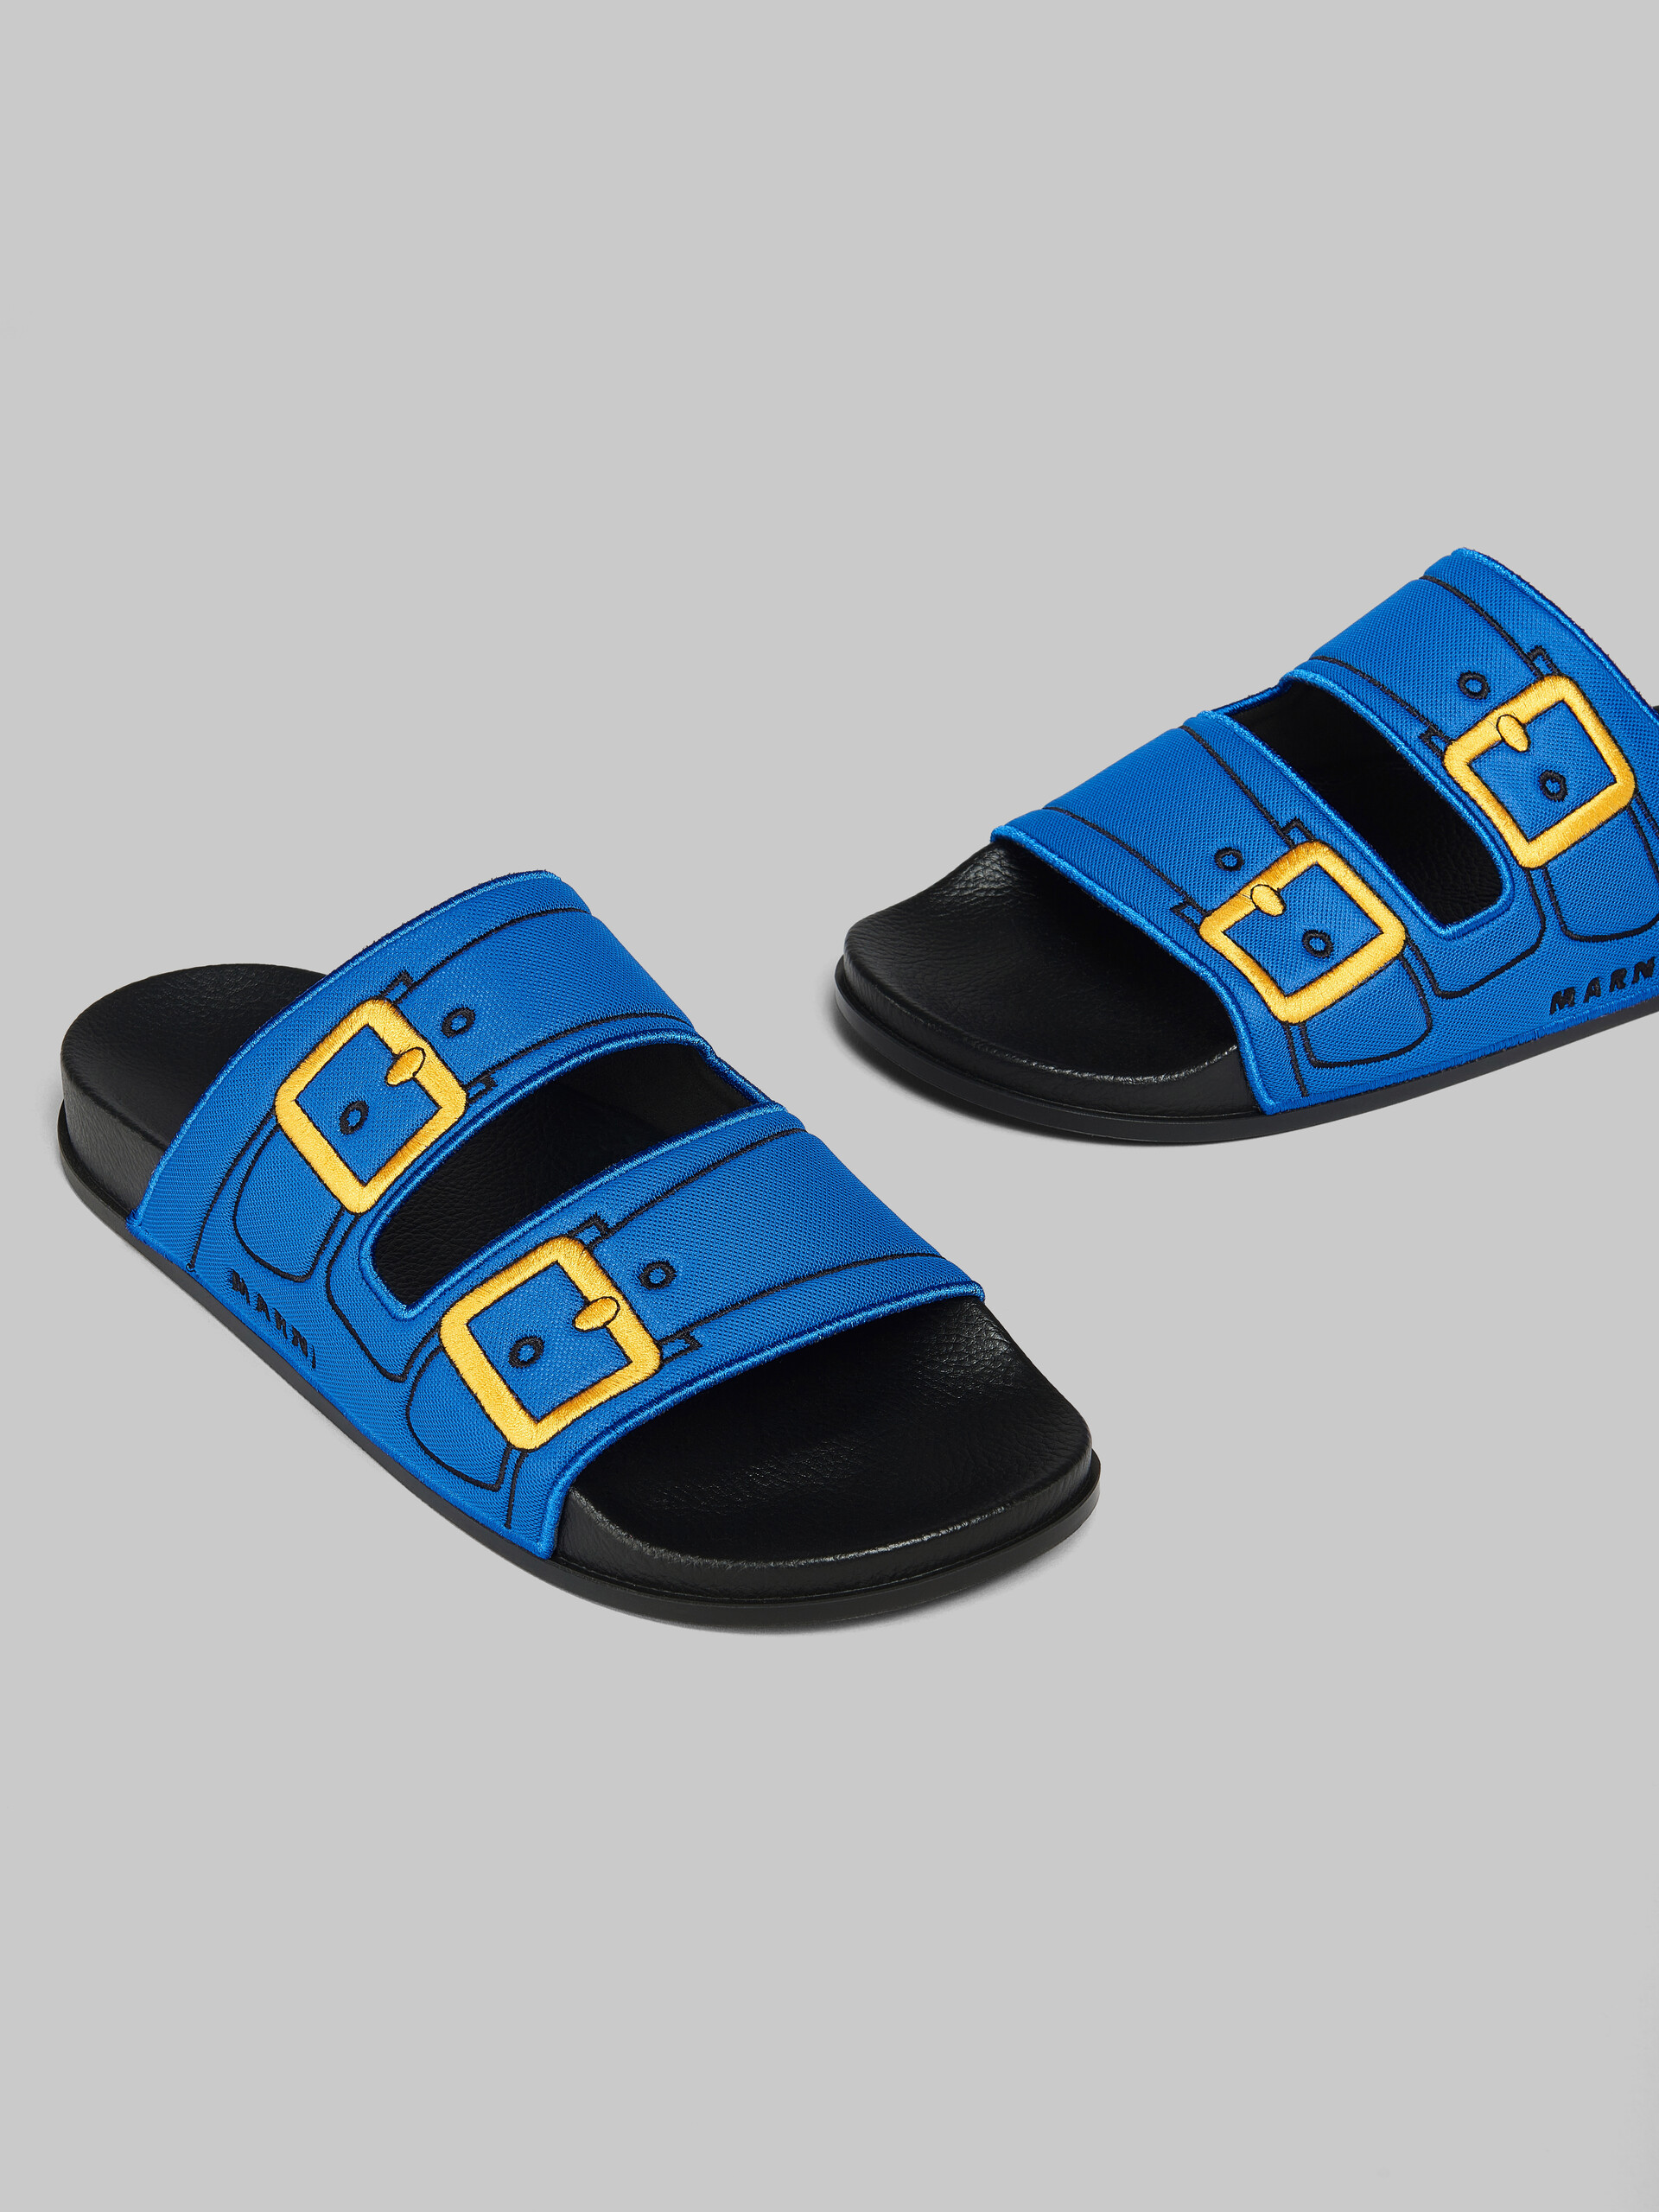 Sandalo blu trompe l'oeil con fibbie ricamate - Sandali - Image 5